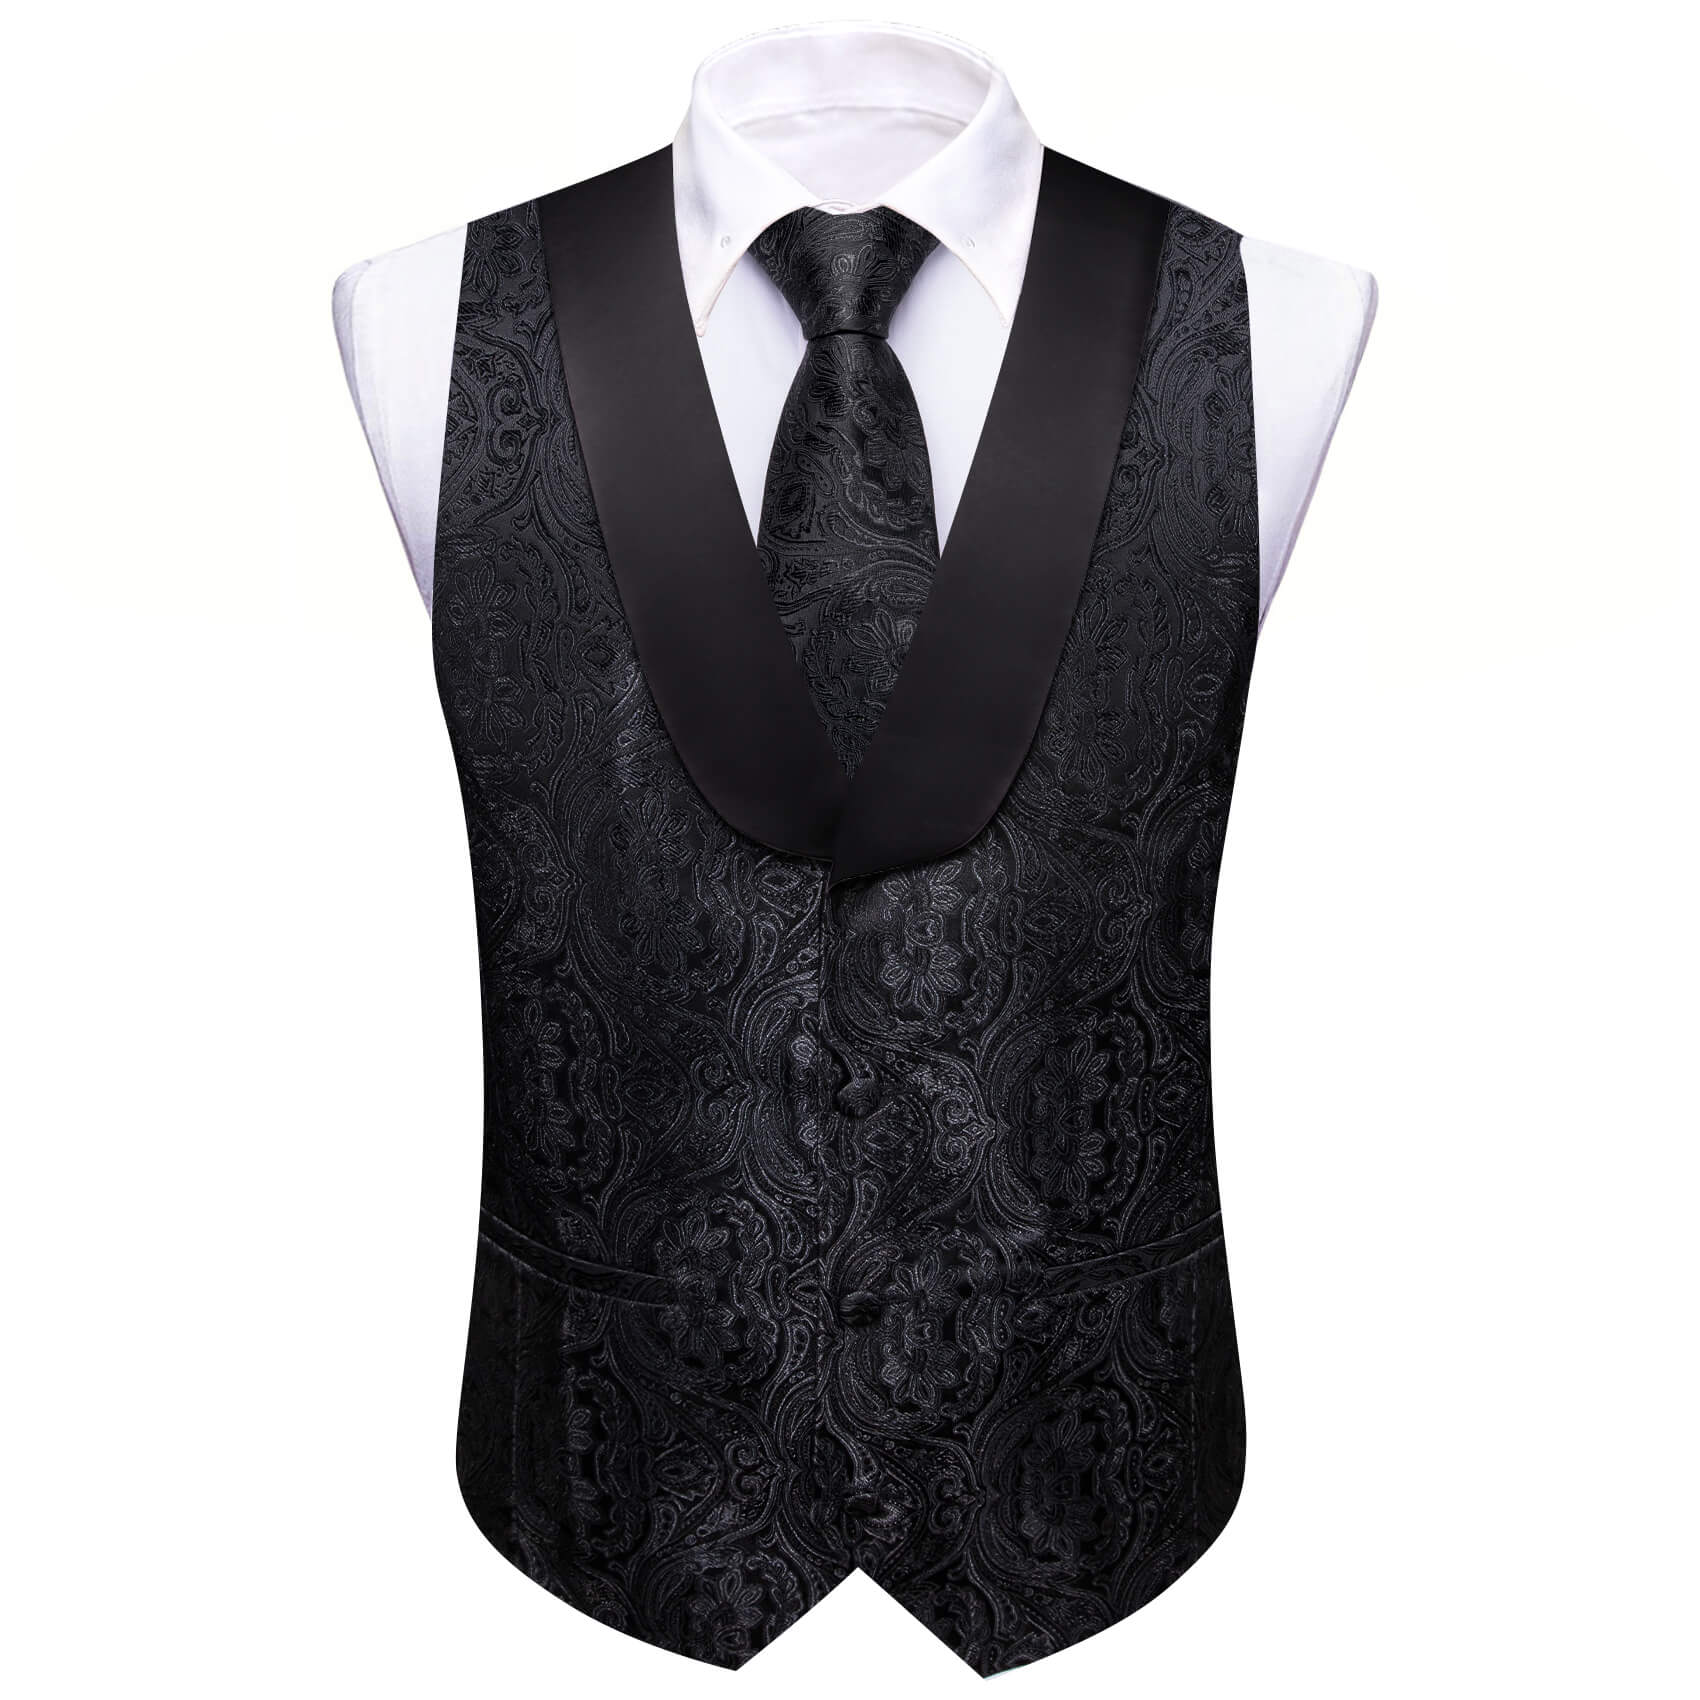 Barry.wang Men's Vest Black Silk Paisley Shawl Collar Vest Tie Handkerchief Cufflinks Set